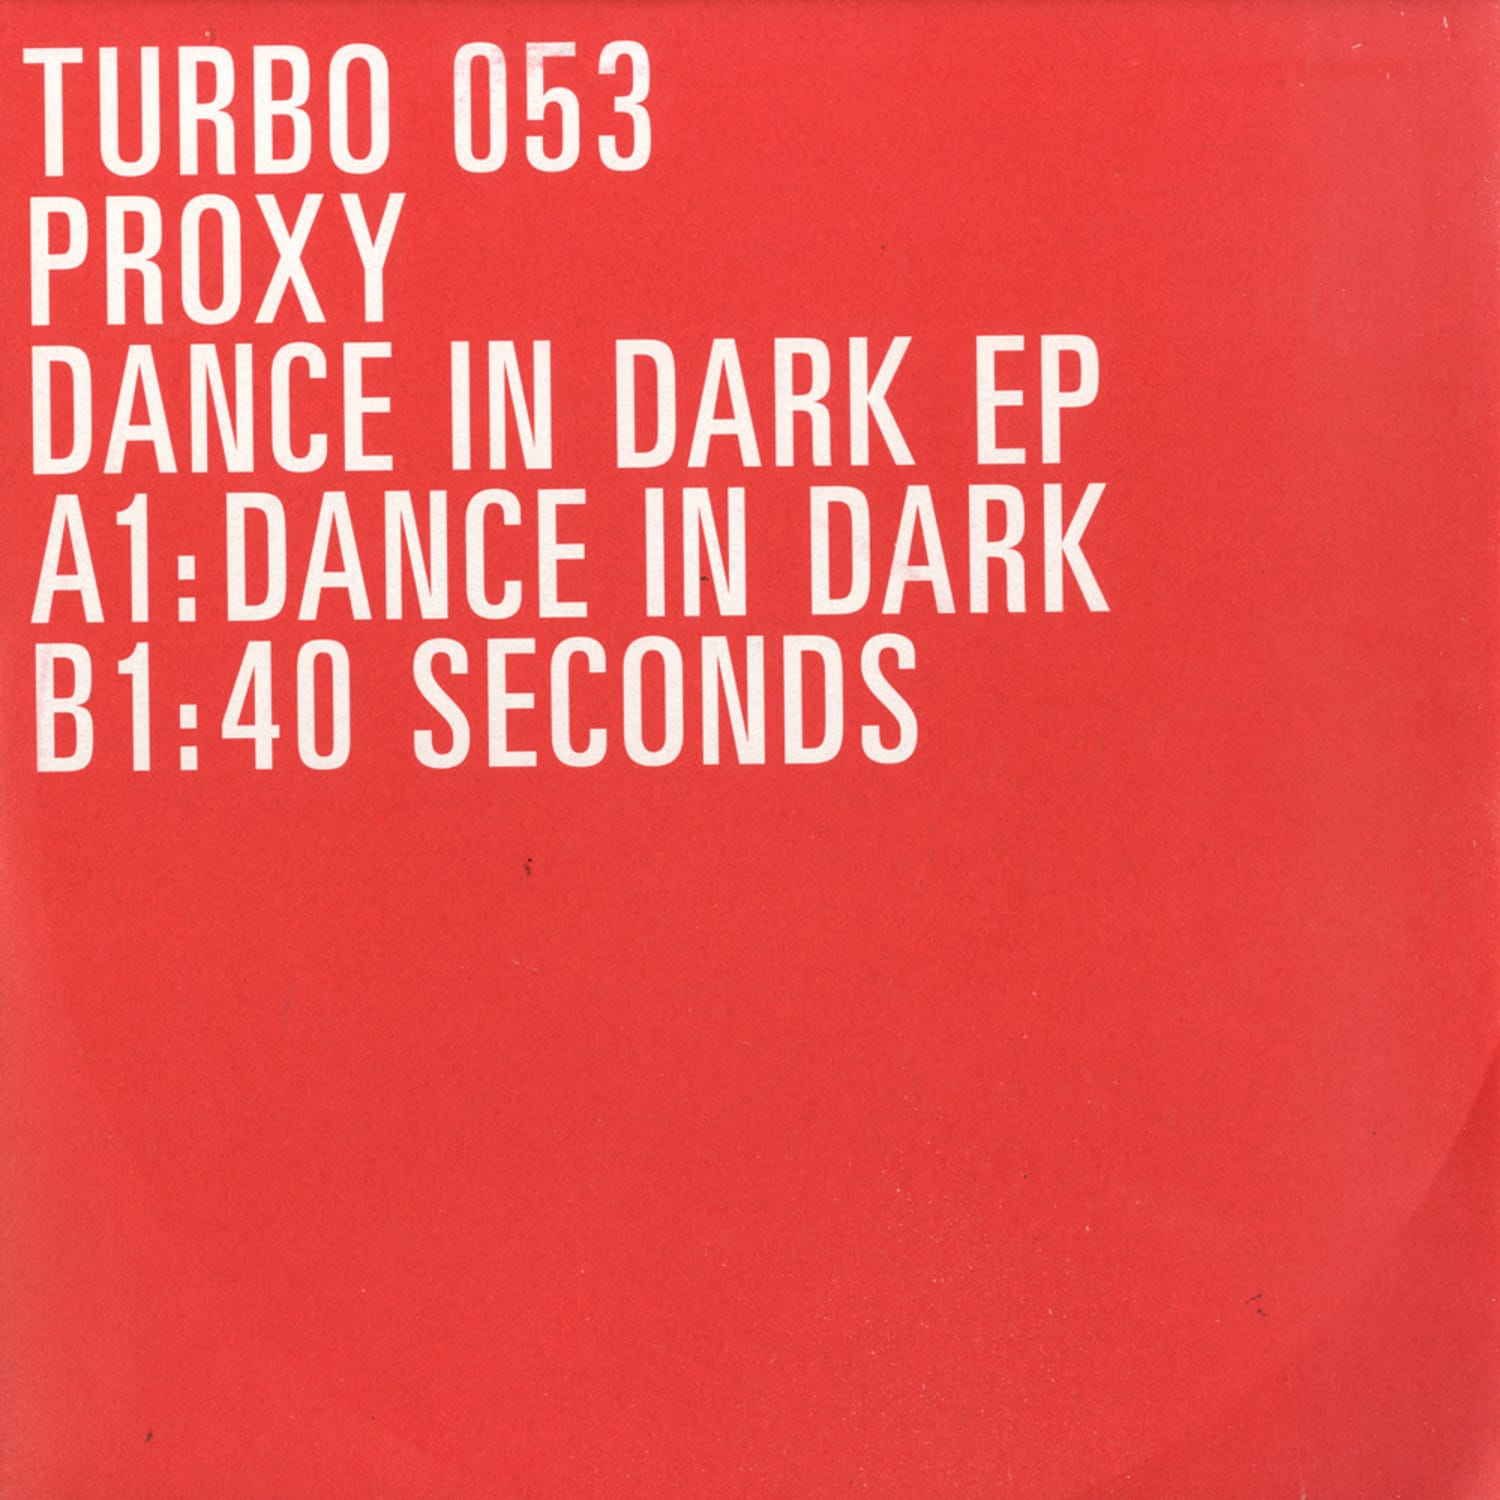 Proxy - DANCE IN THE DARK EP